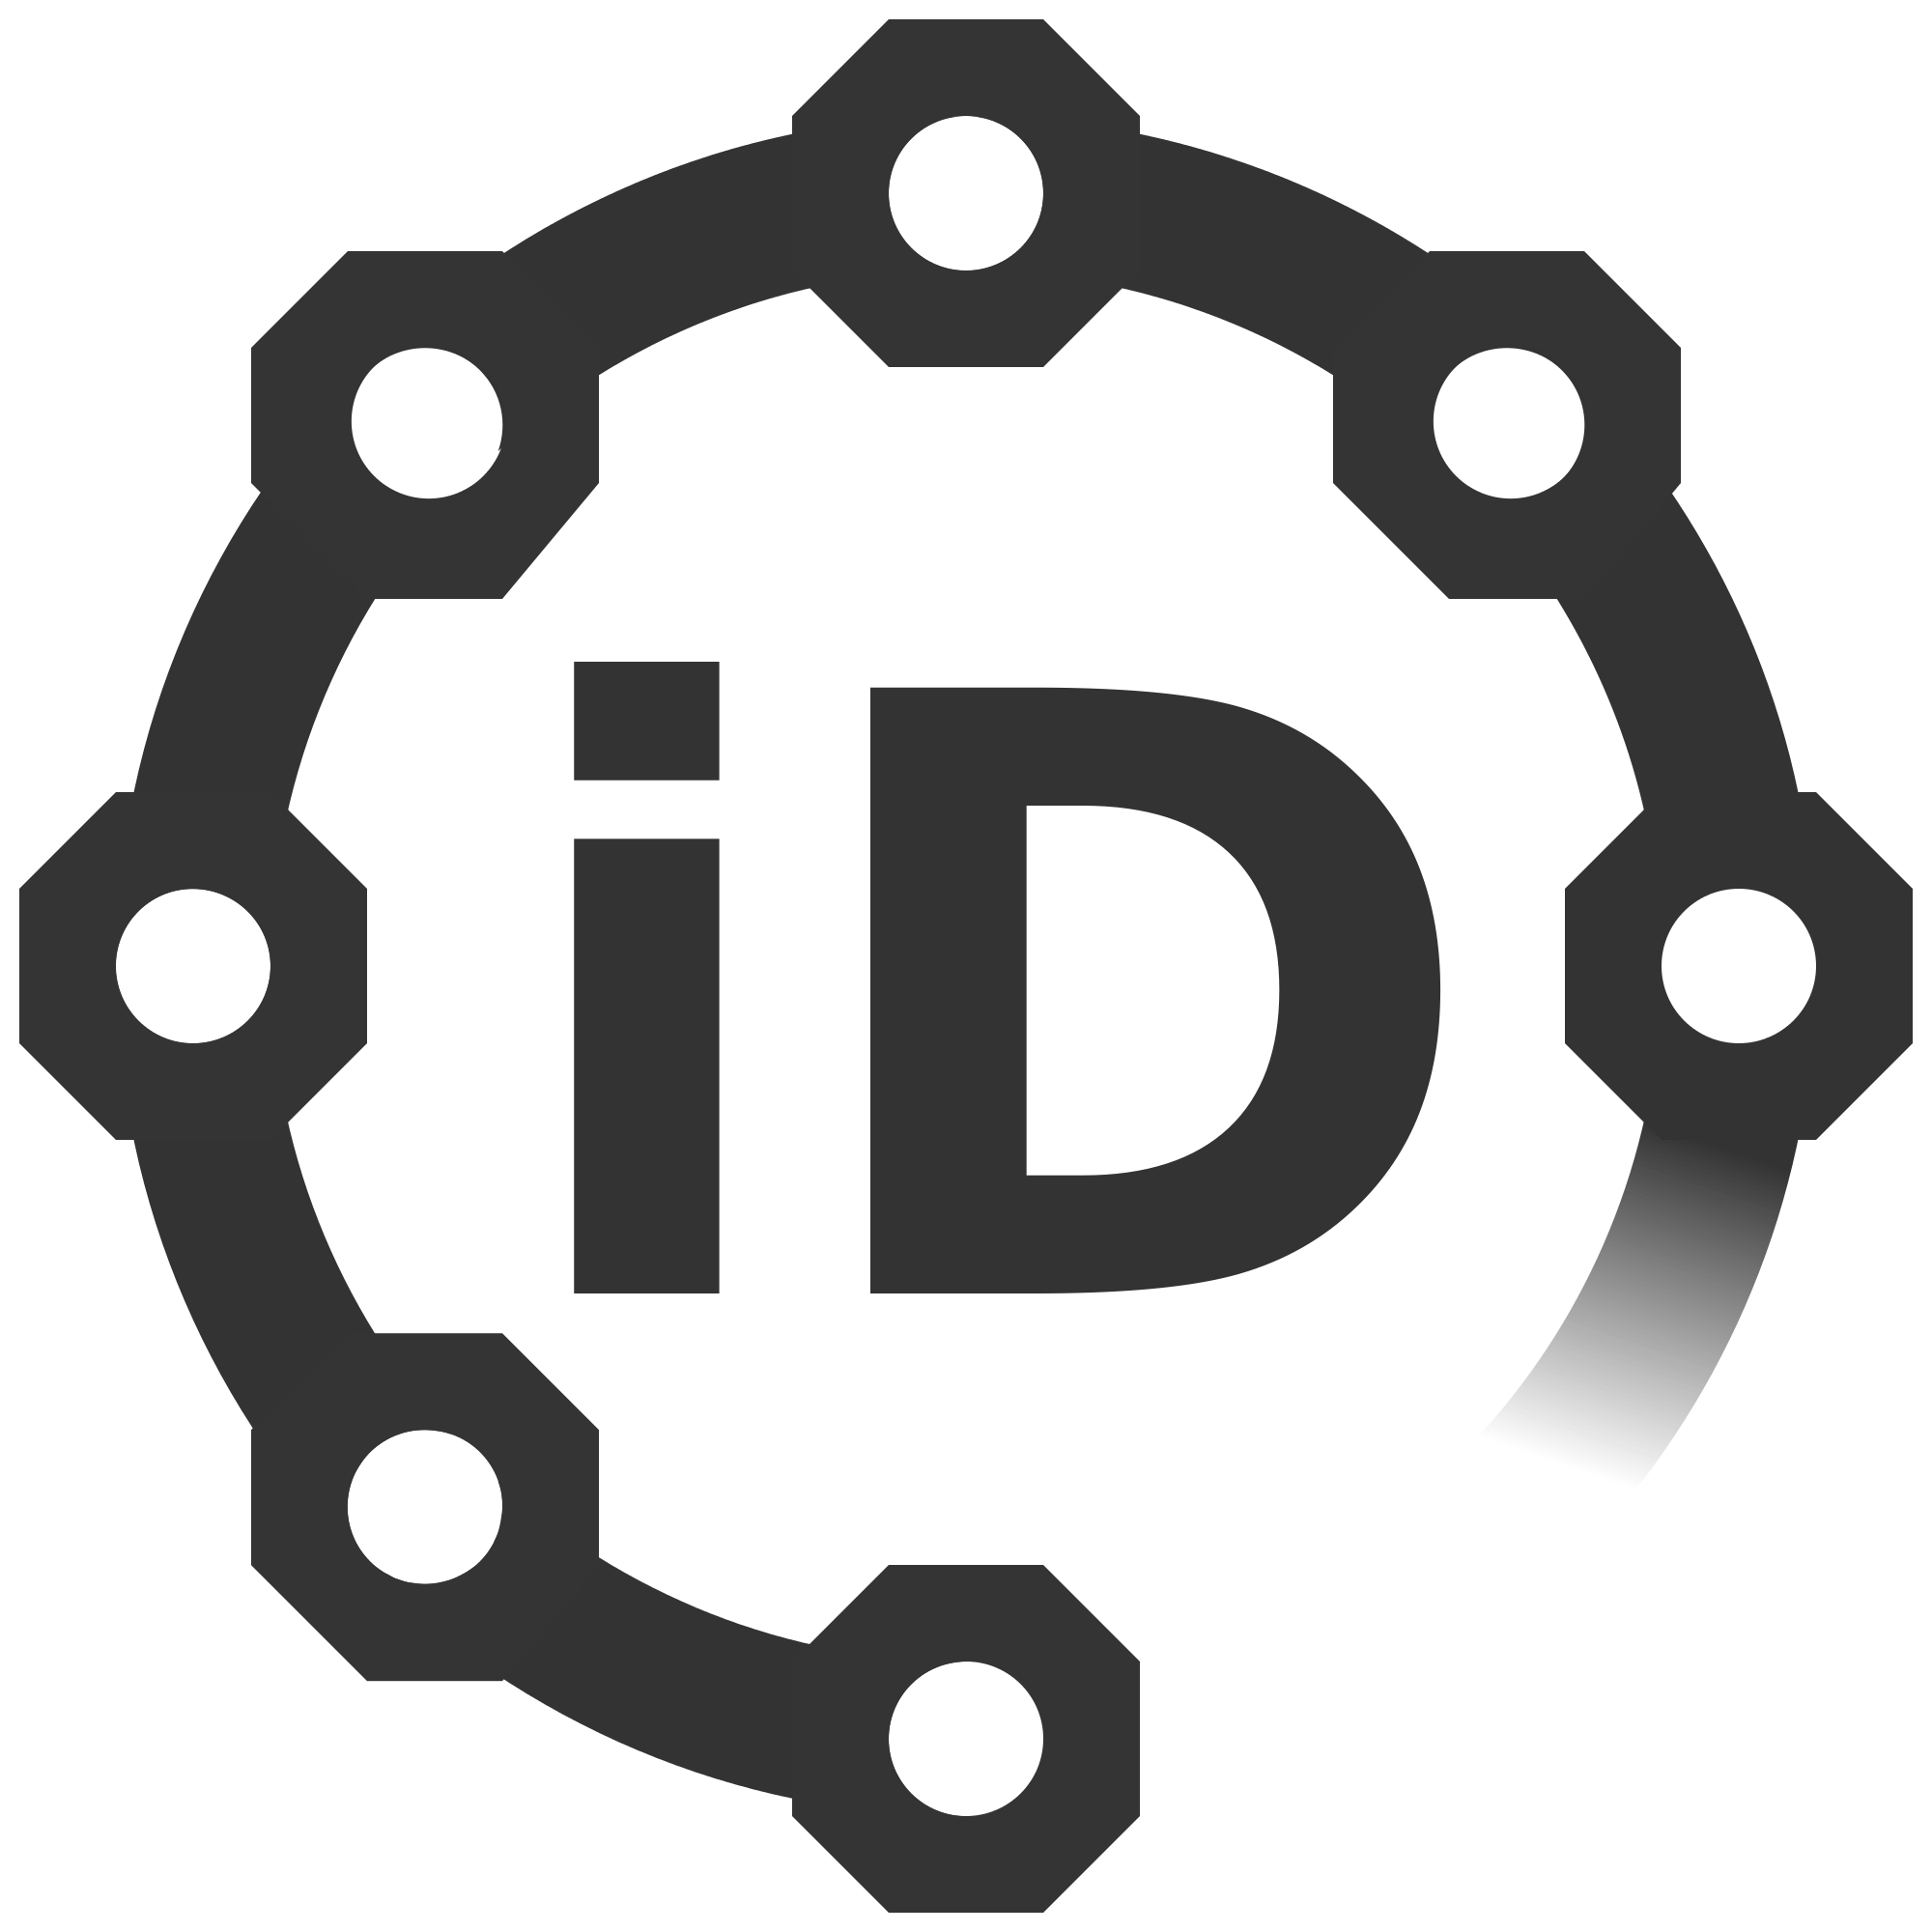 ID Logo - File:OpenStreetMap-Editor iD Logo.svg - Wikimedia Commons